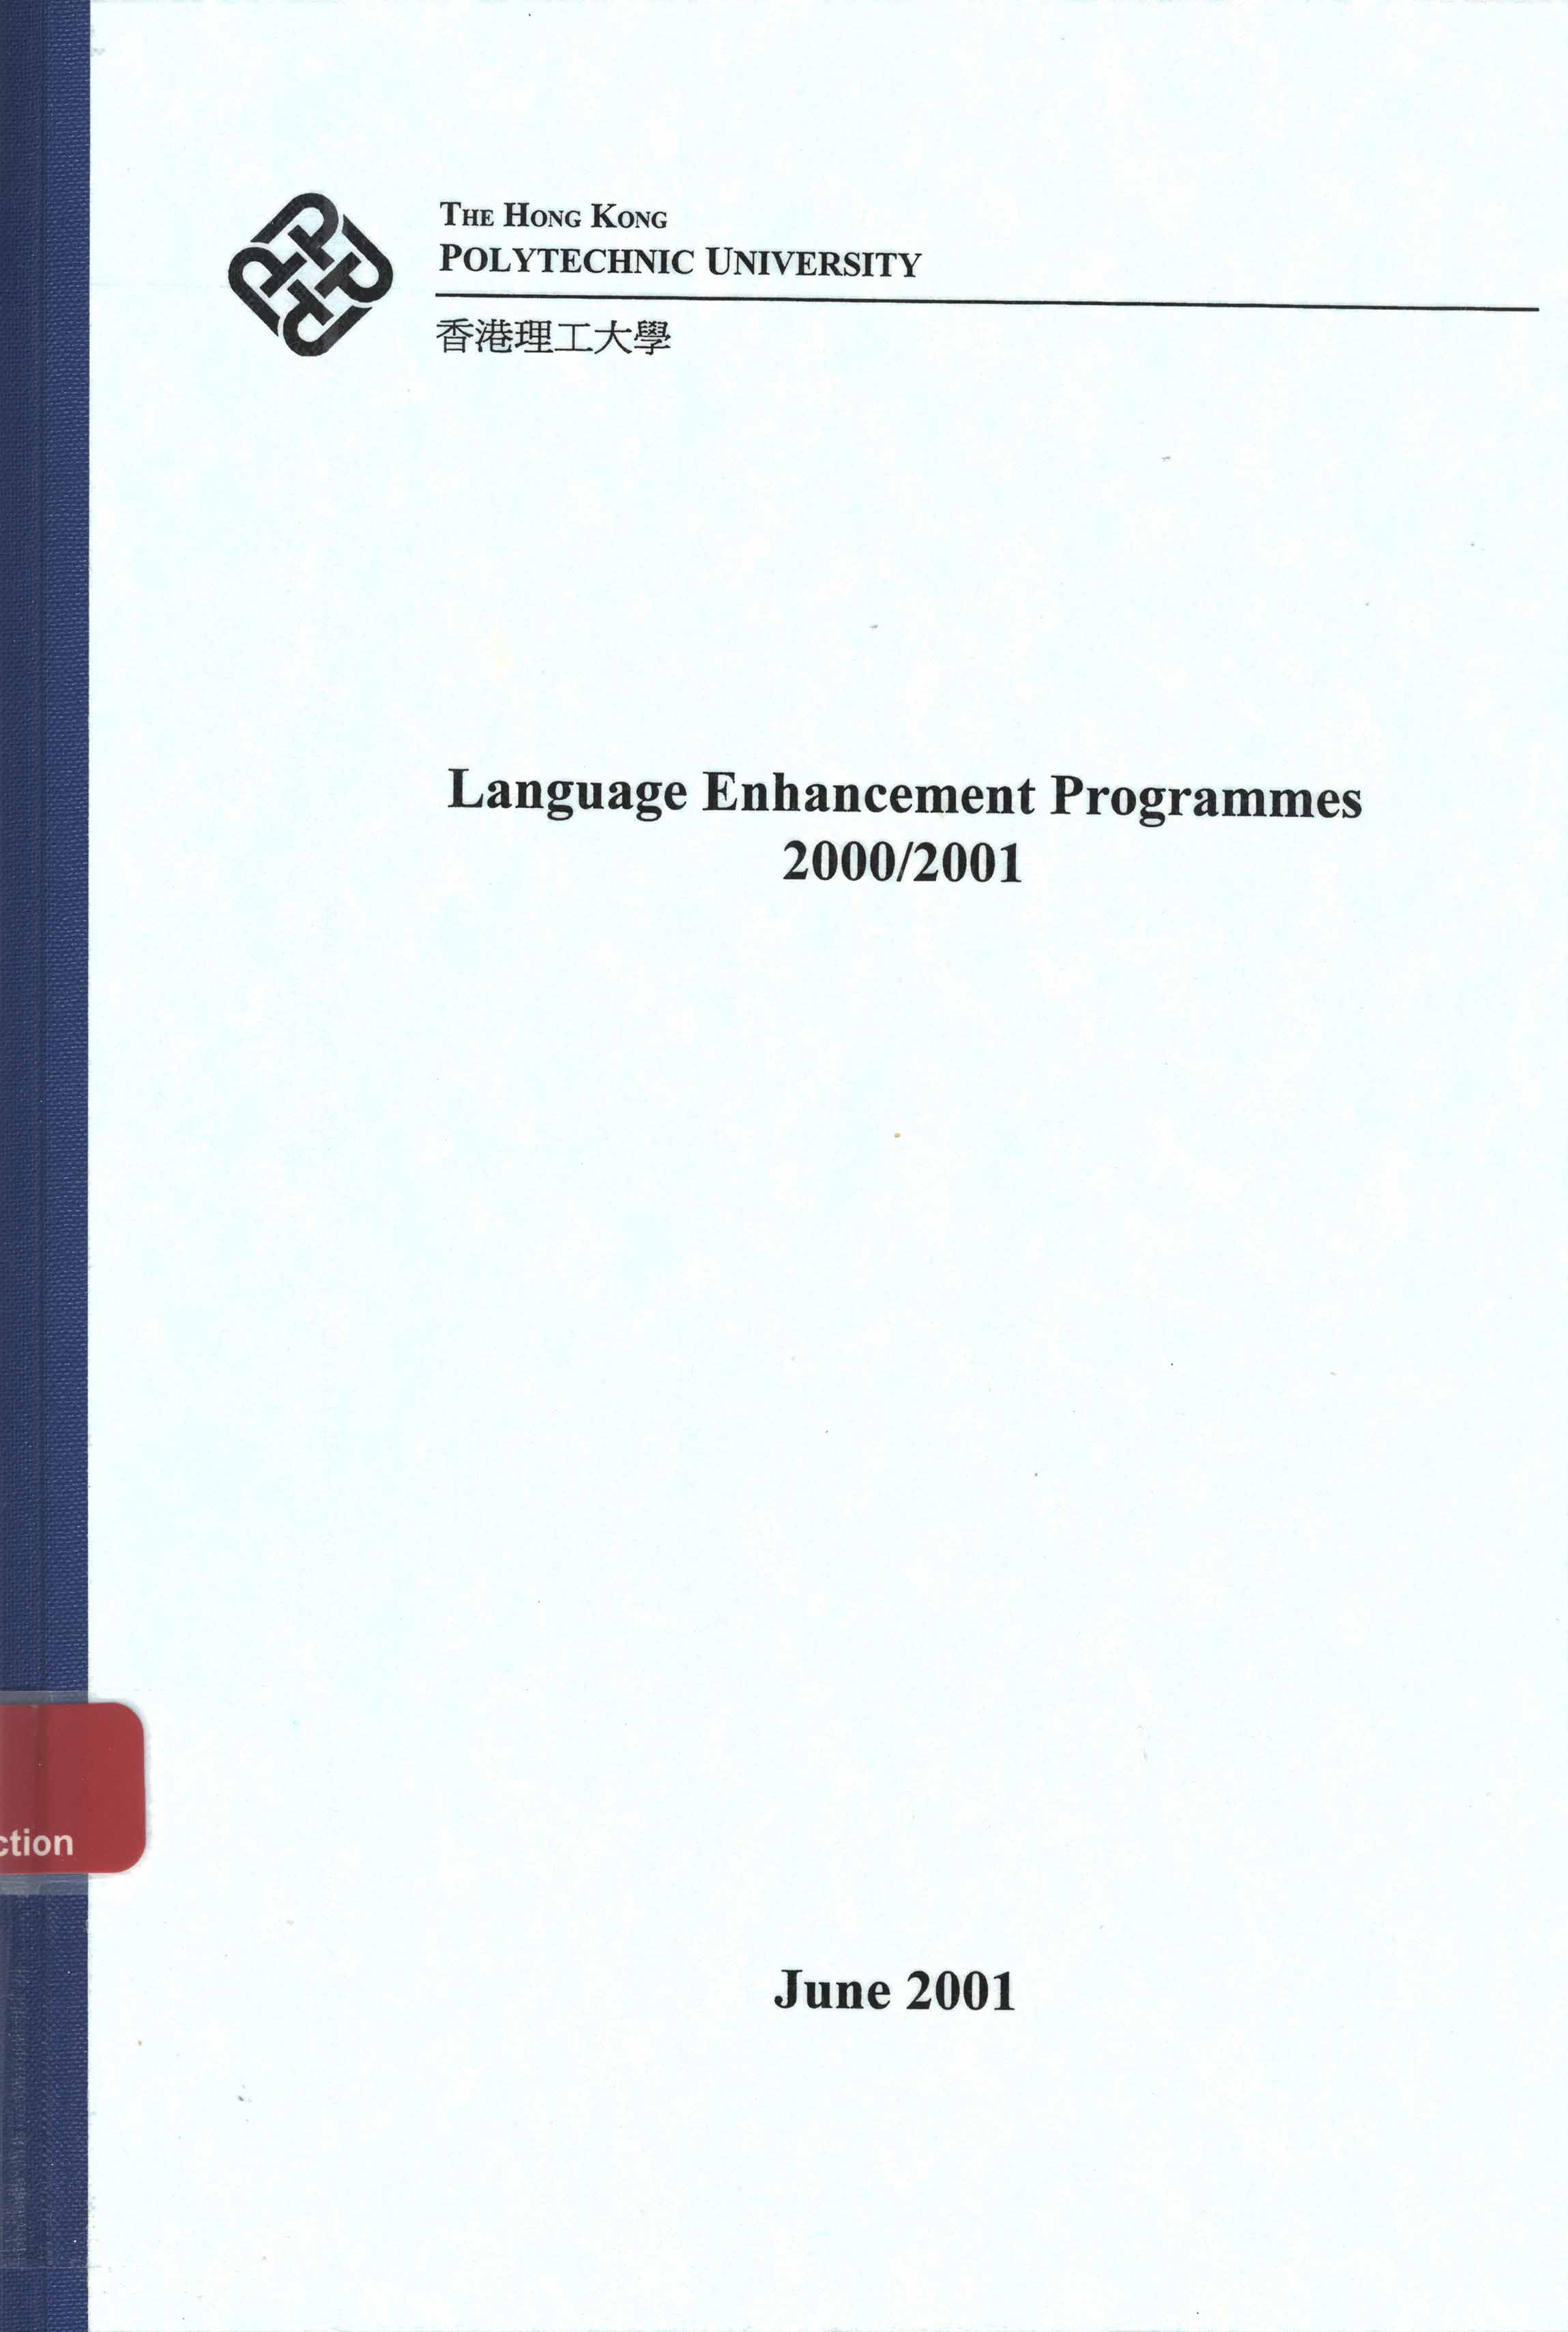 Annual report on language enhancement programmes 2000/2001